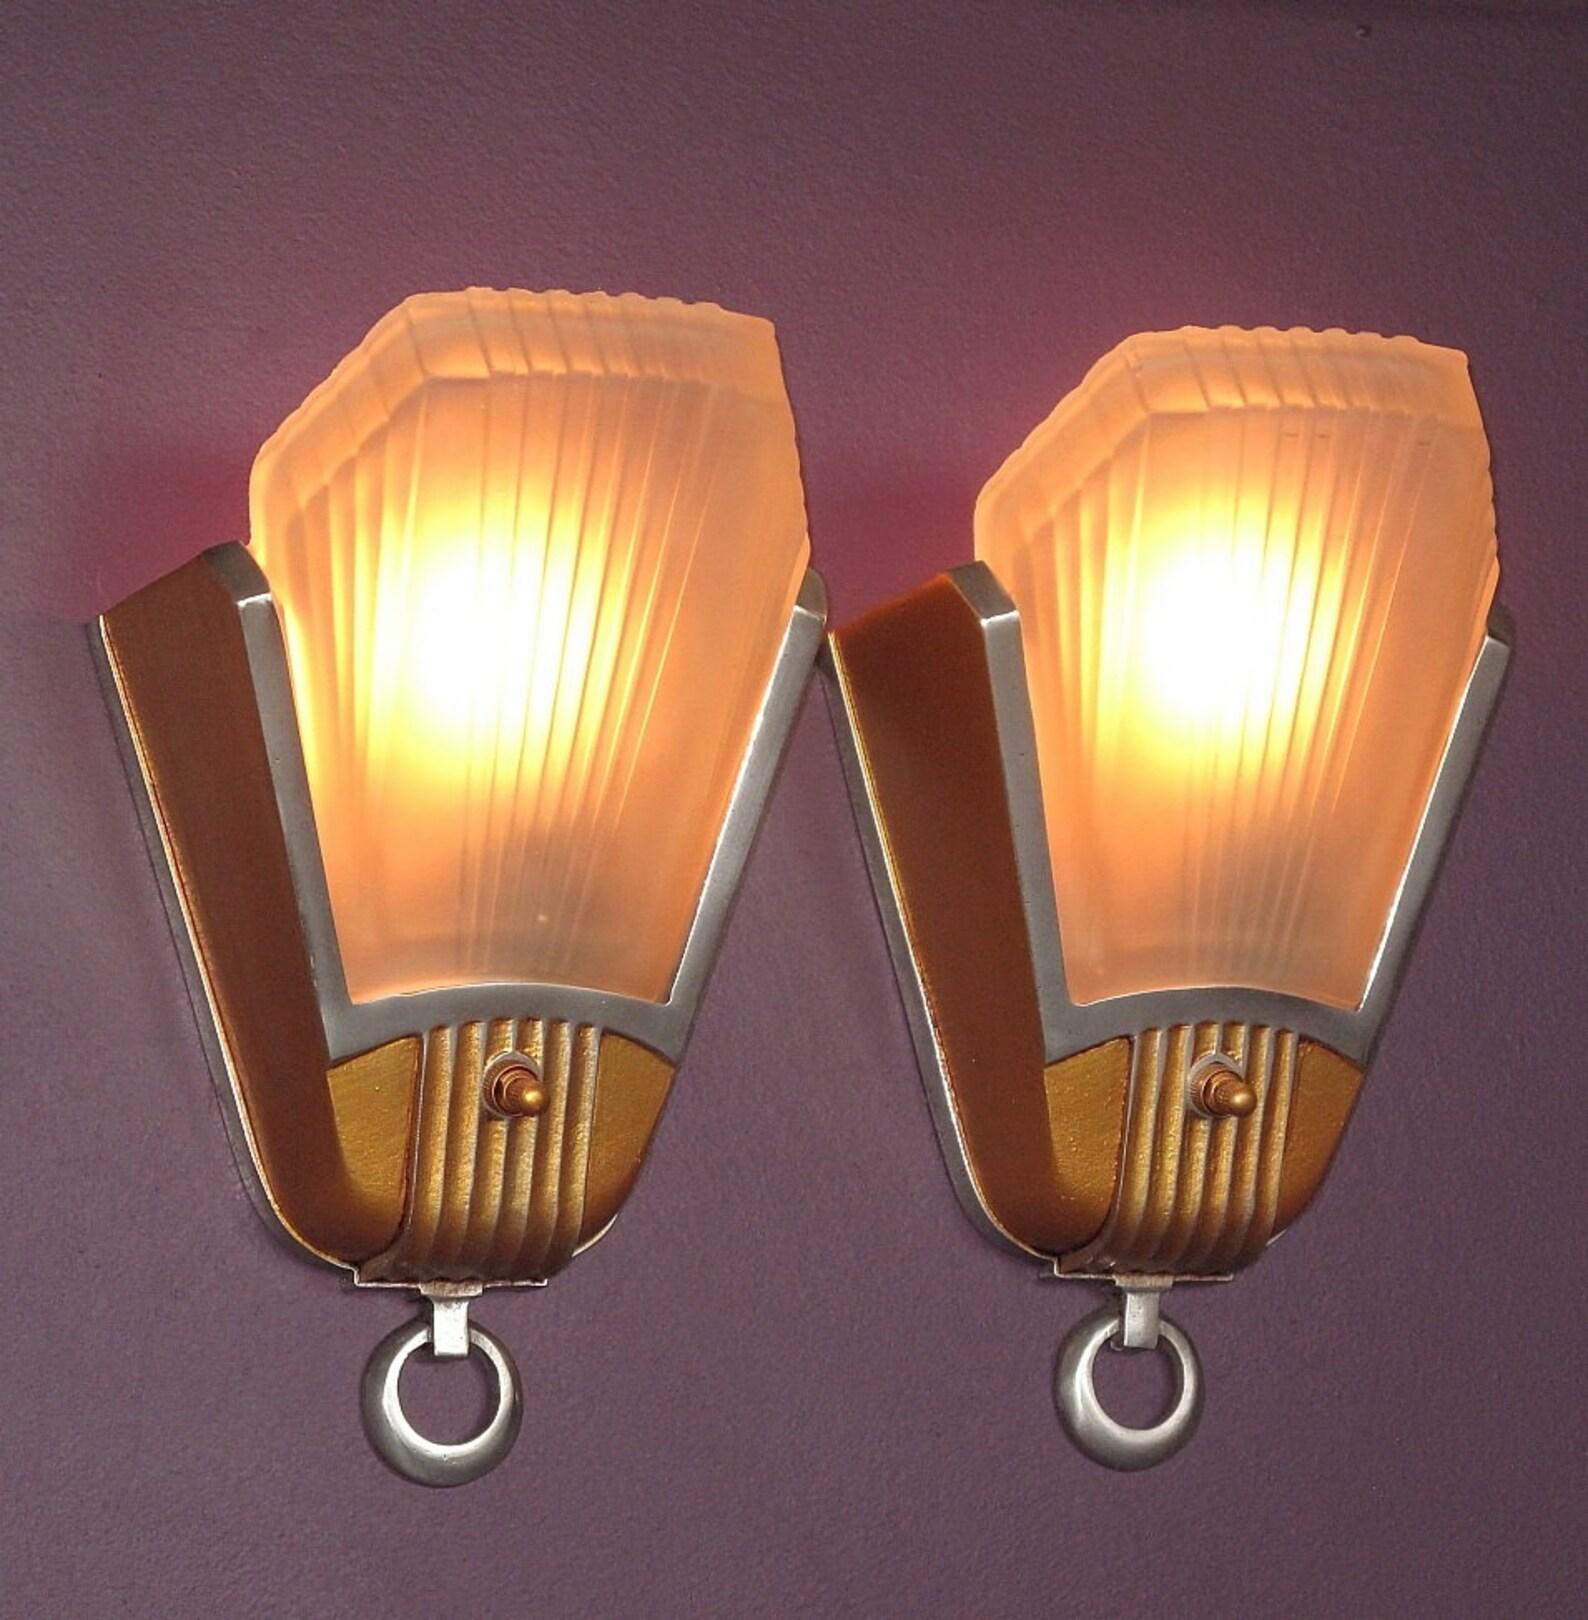 1930s wall light